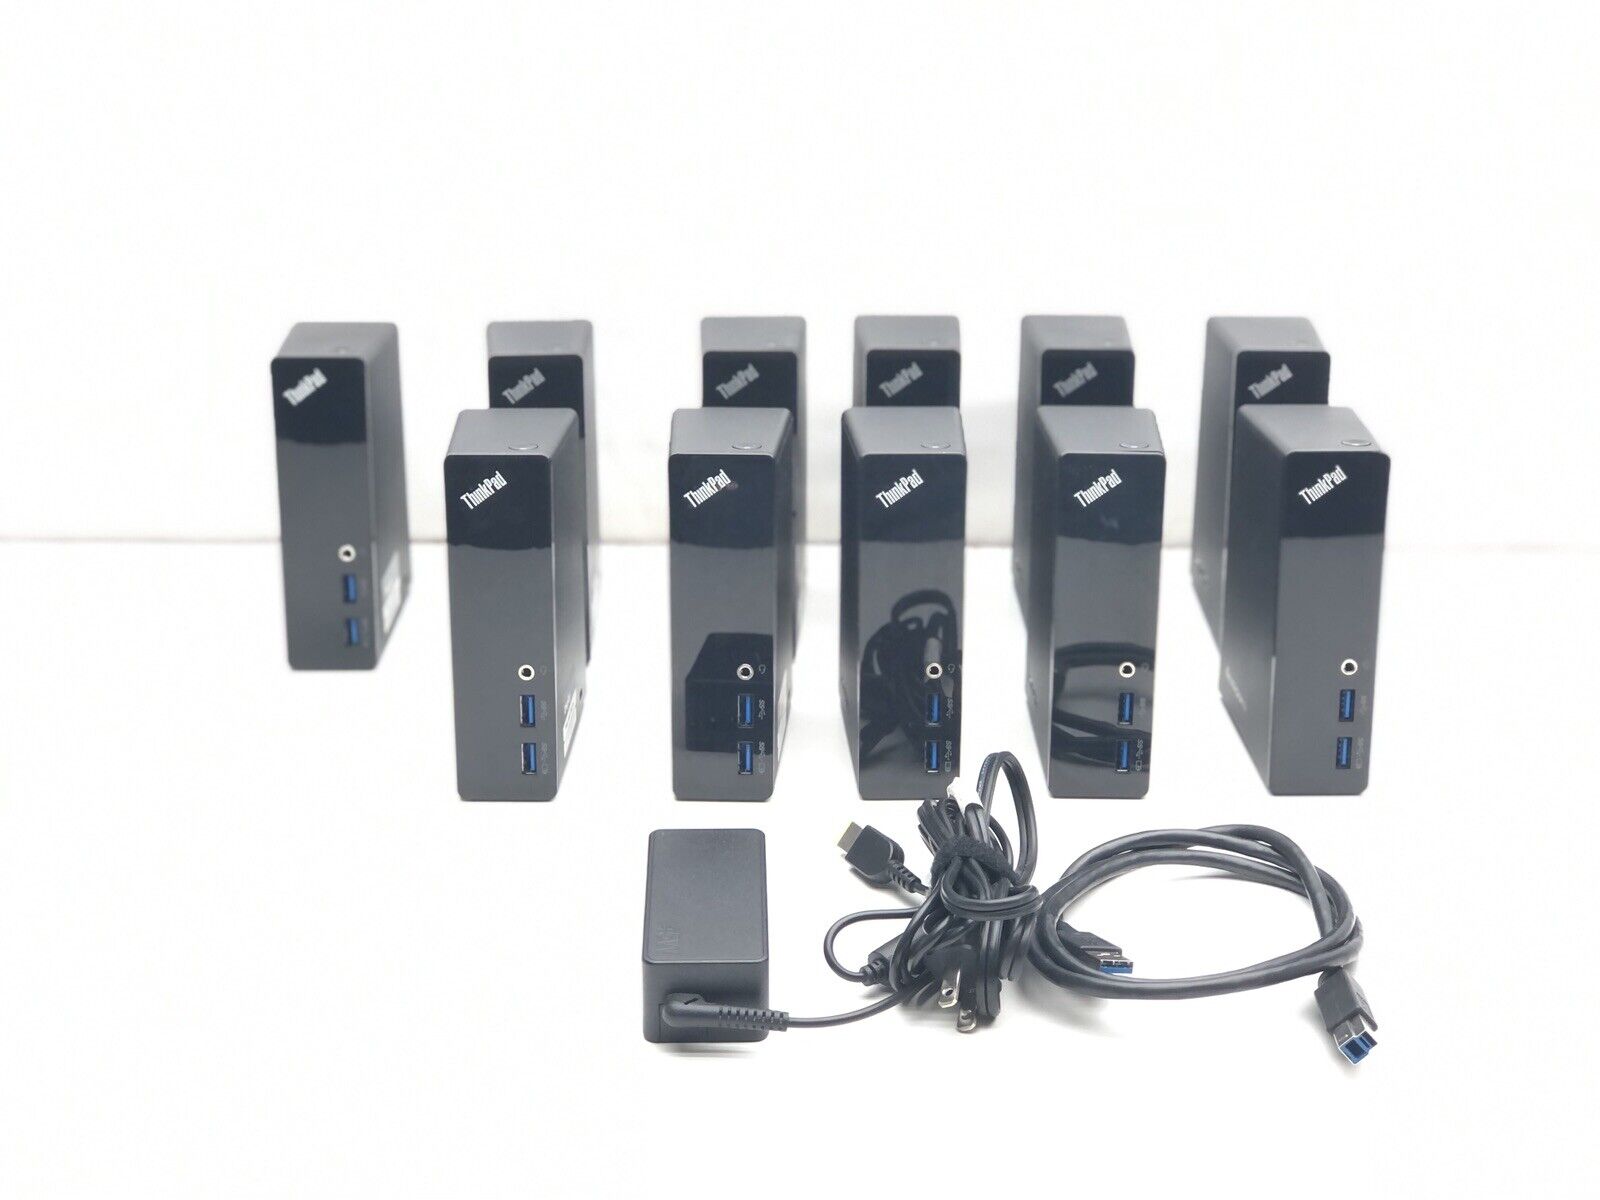 Lot of 11 Lenovo Thinkpad USB 3.0 Basic Dock W/ Power Supply & USB